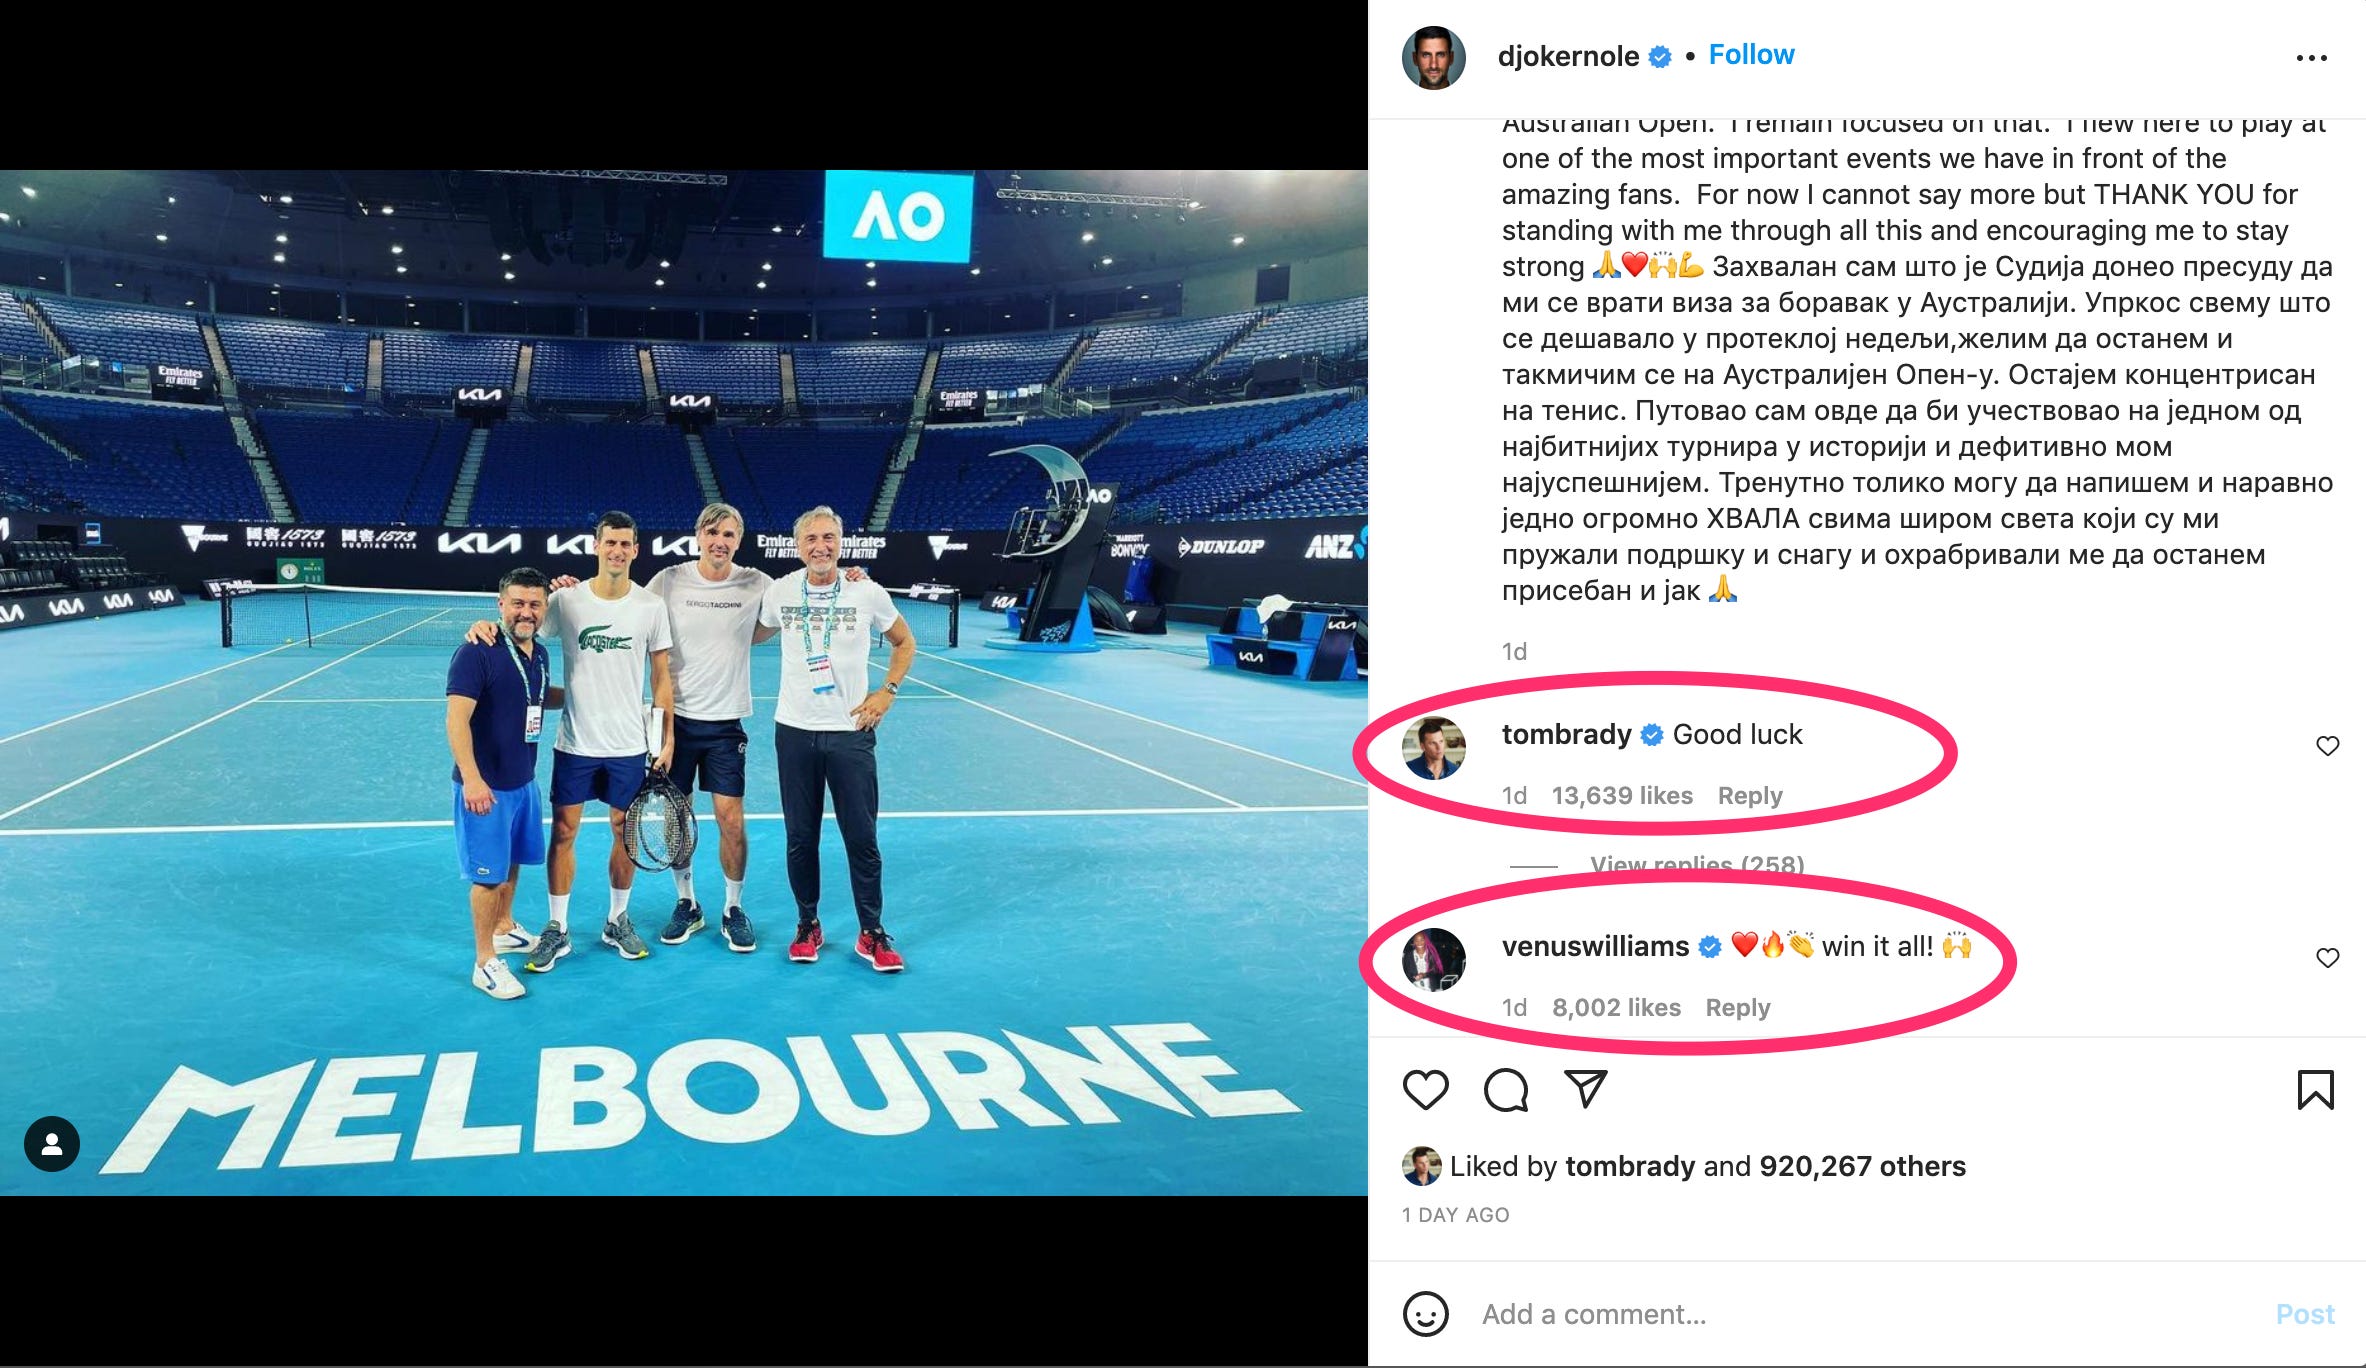 Tom Brady und Venus Williams kommentieren Novak Djokovics Instagram-Post.